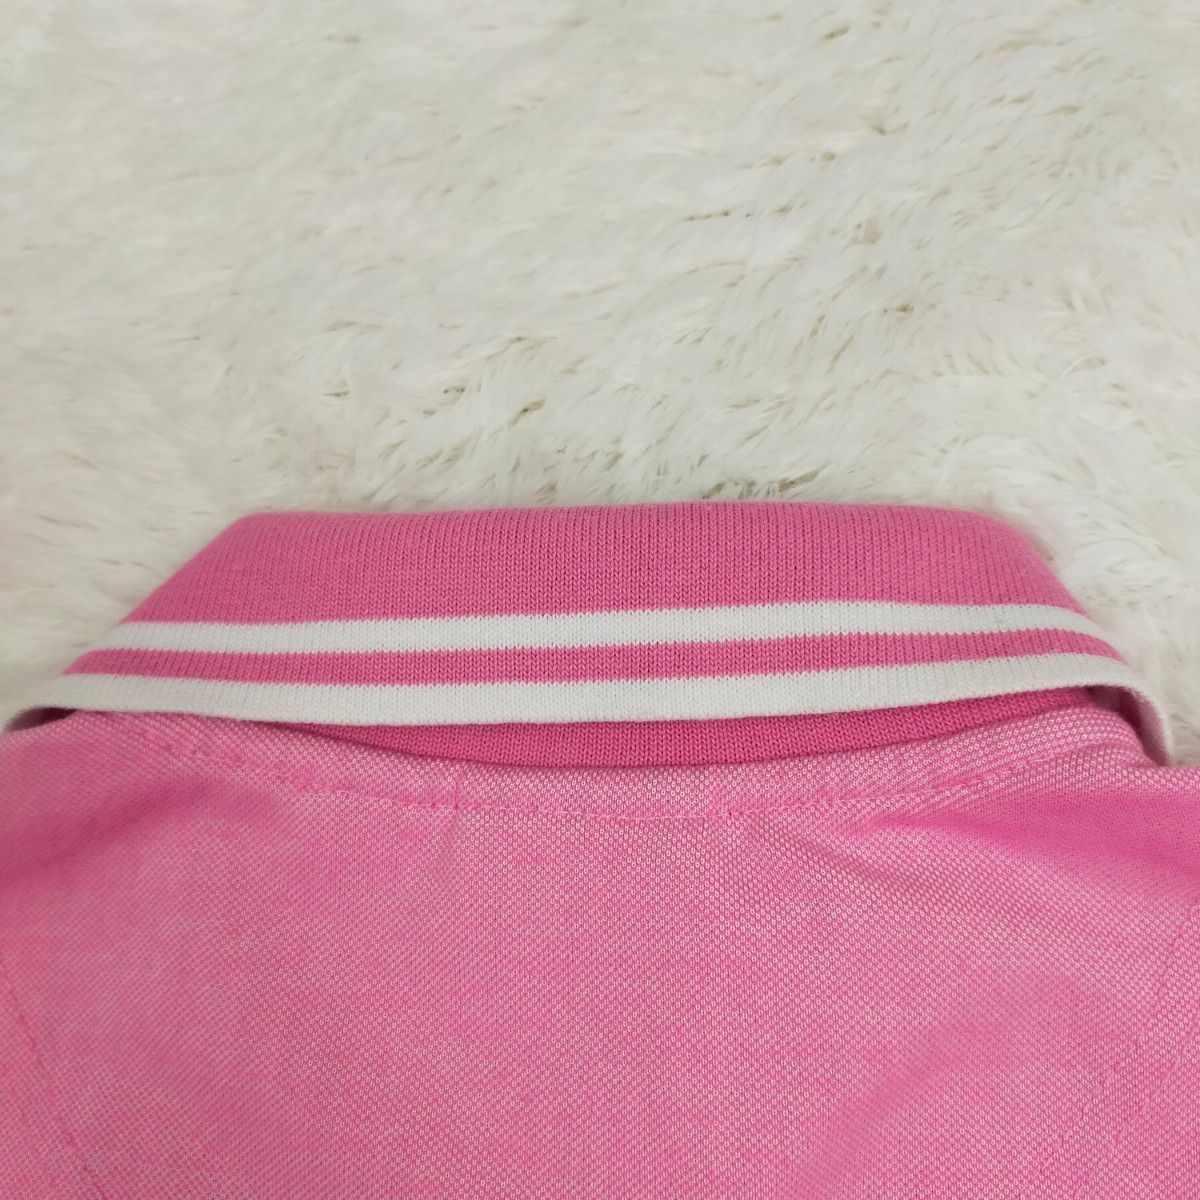 FIDRA フィドラ 春夏 ゴルフウェア ゴルフシャツ ポロシャツ 半袖 ピンク色 吸汗速乾ドライ ストレッチ レディース M